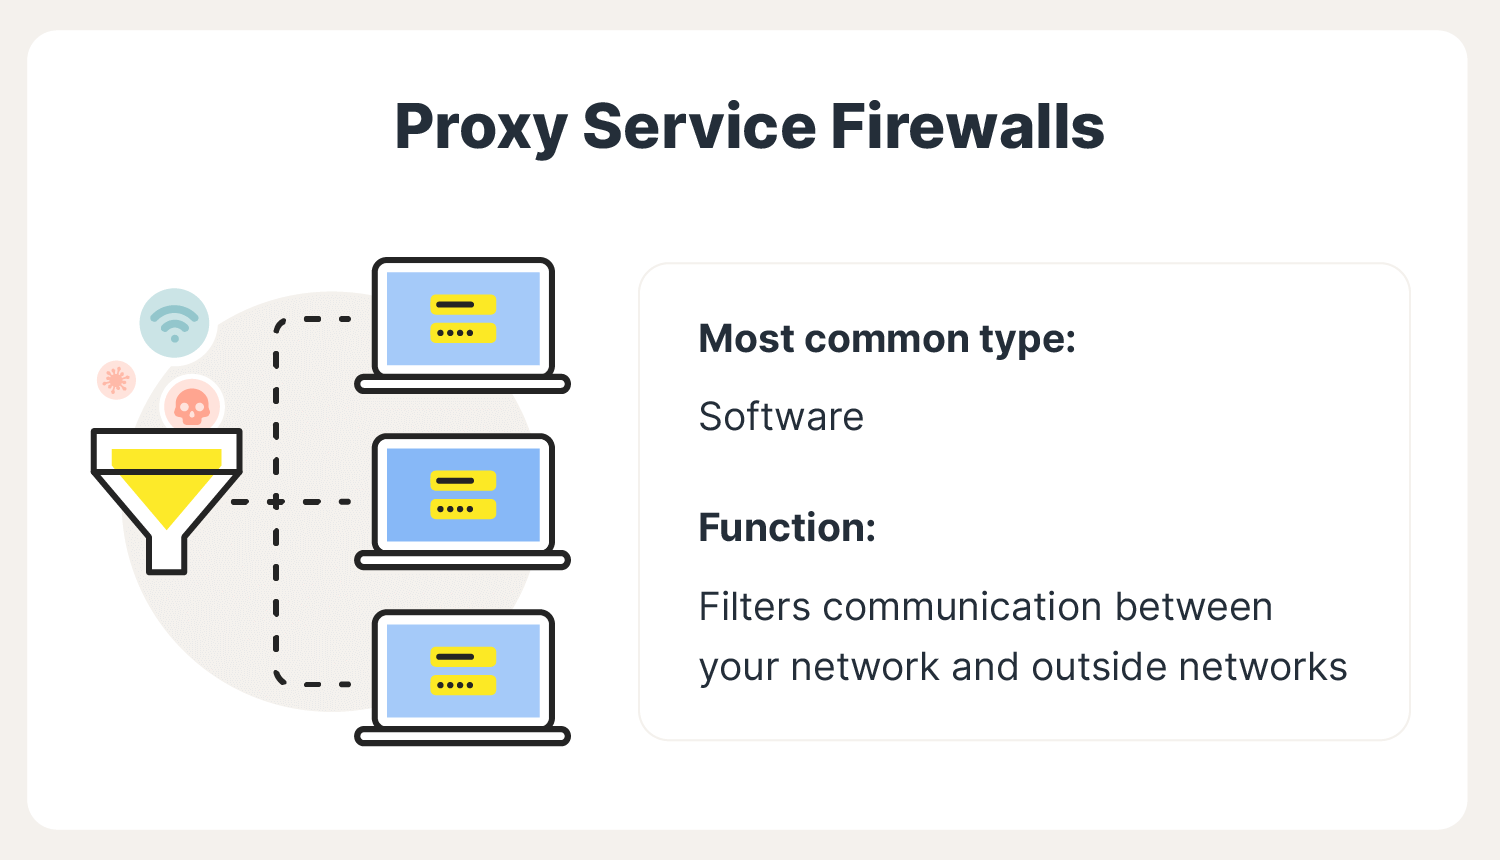 An image describes proxy service firewalls, a popular type of firewall.